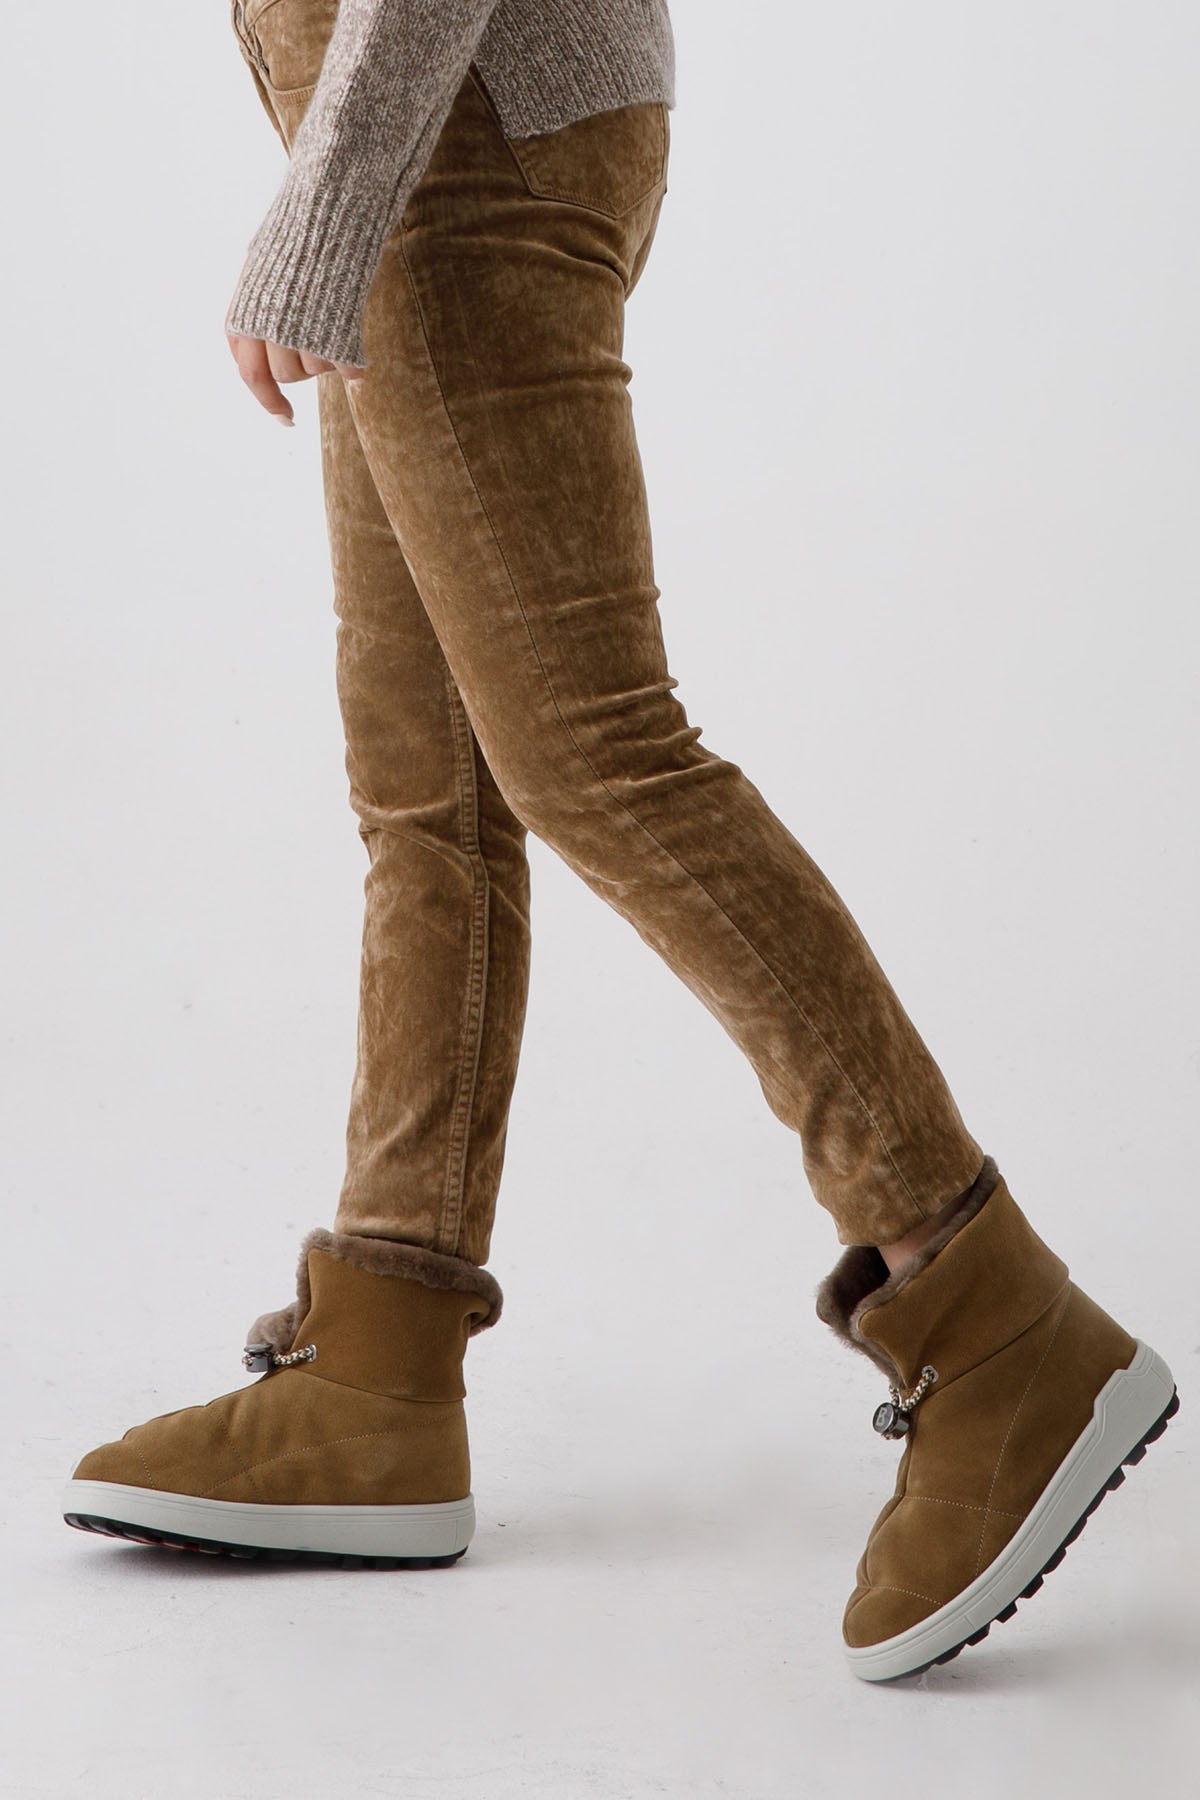 Polo Ralph Lauren Tompkins Skinny Fit Jeans-Libas Trendy Fashion Store